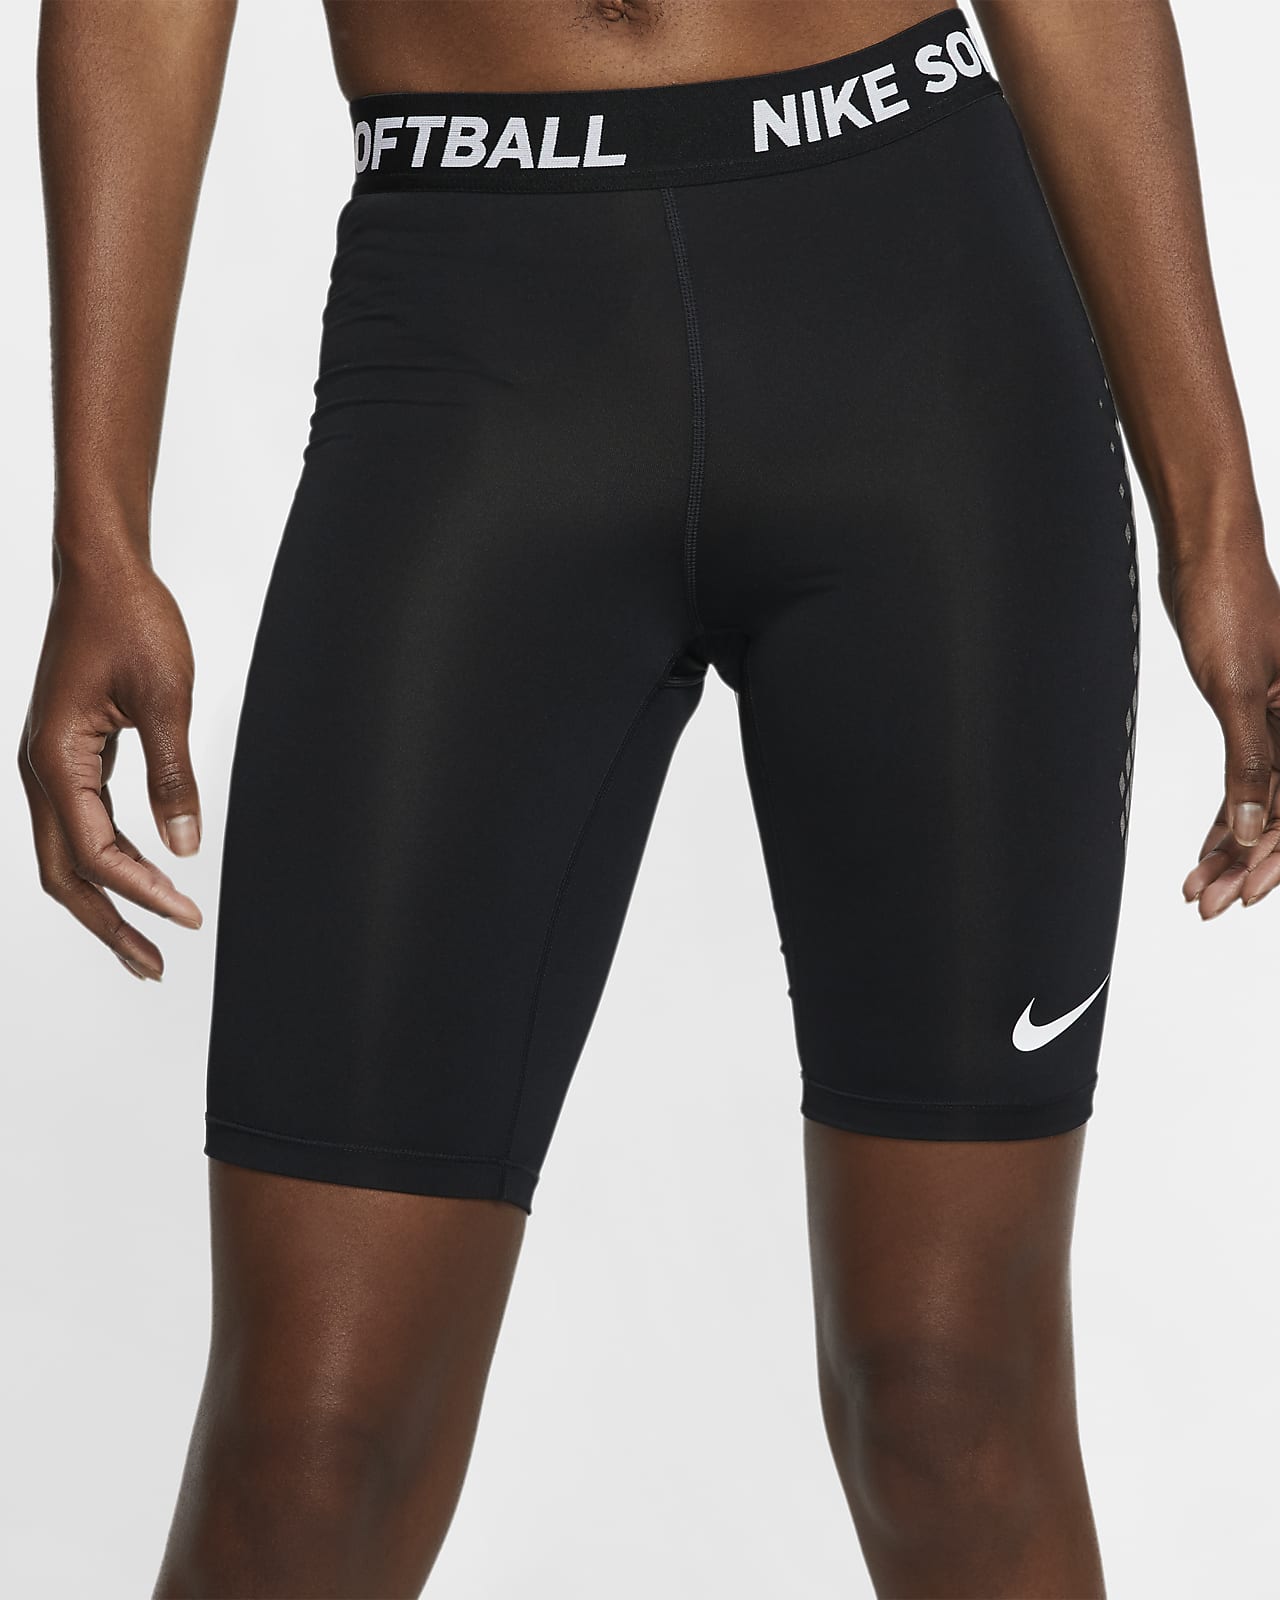 Shorts de softball interiores para mujer Nike